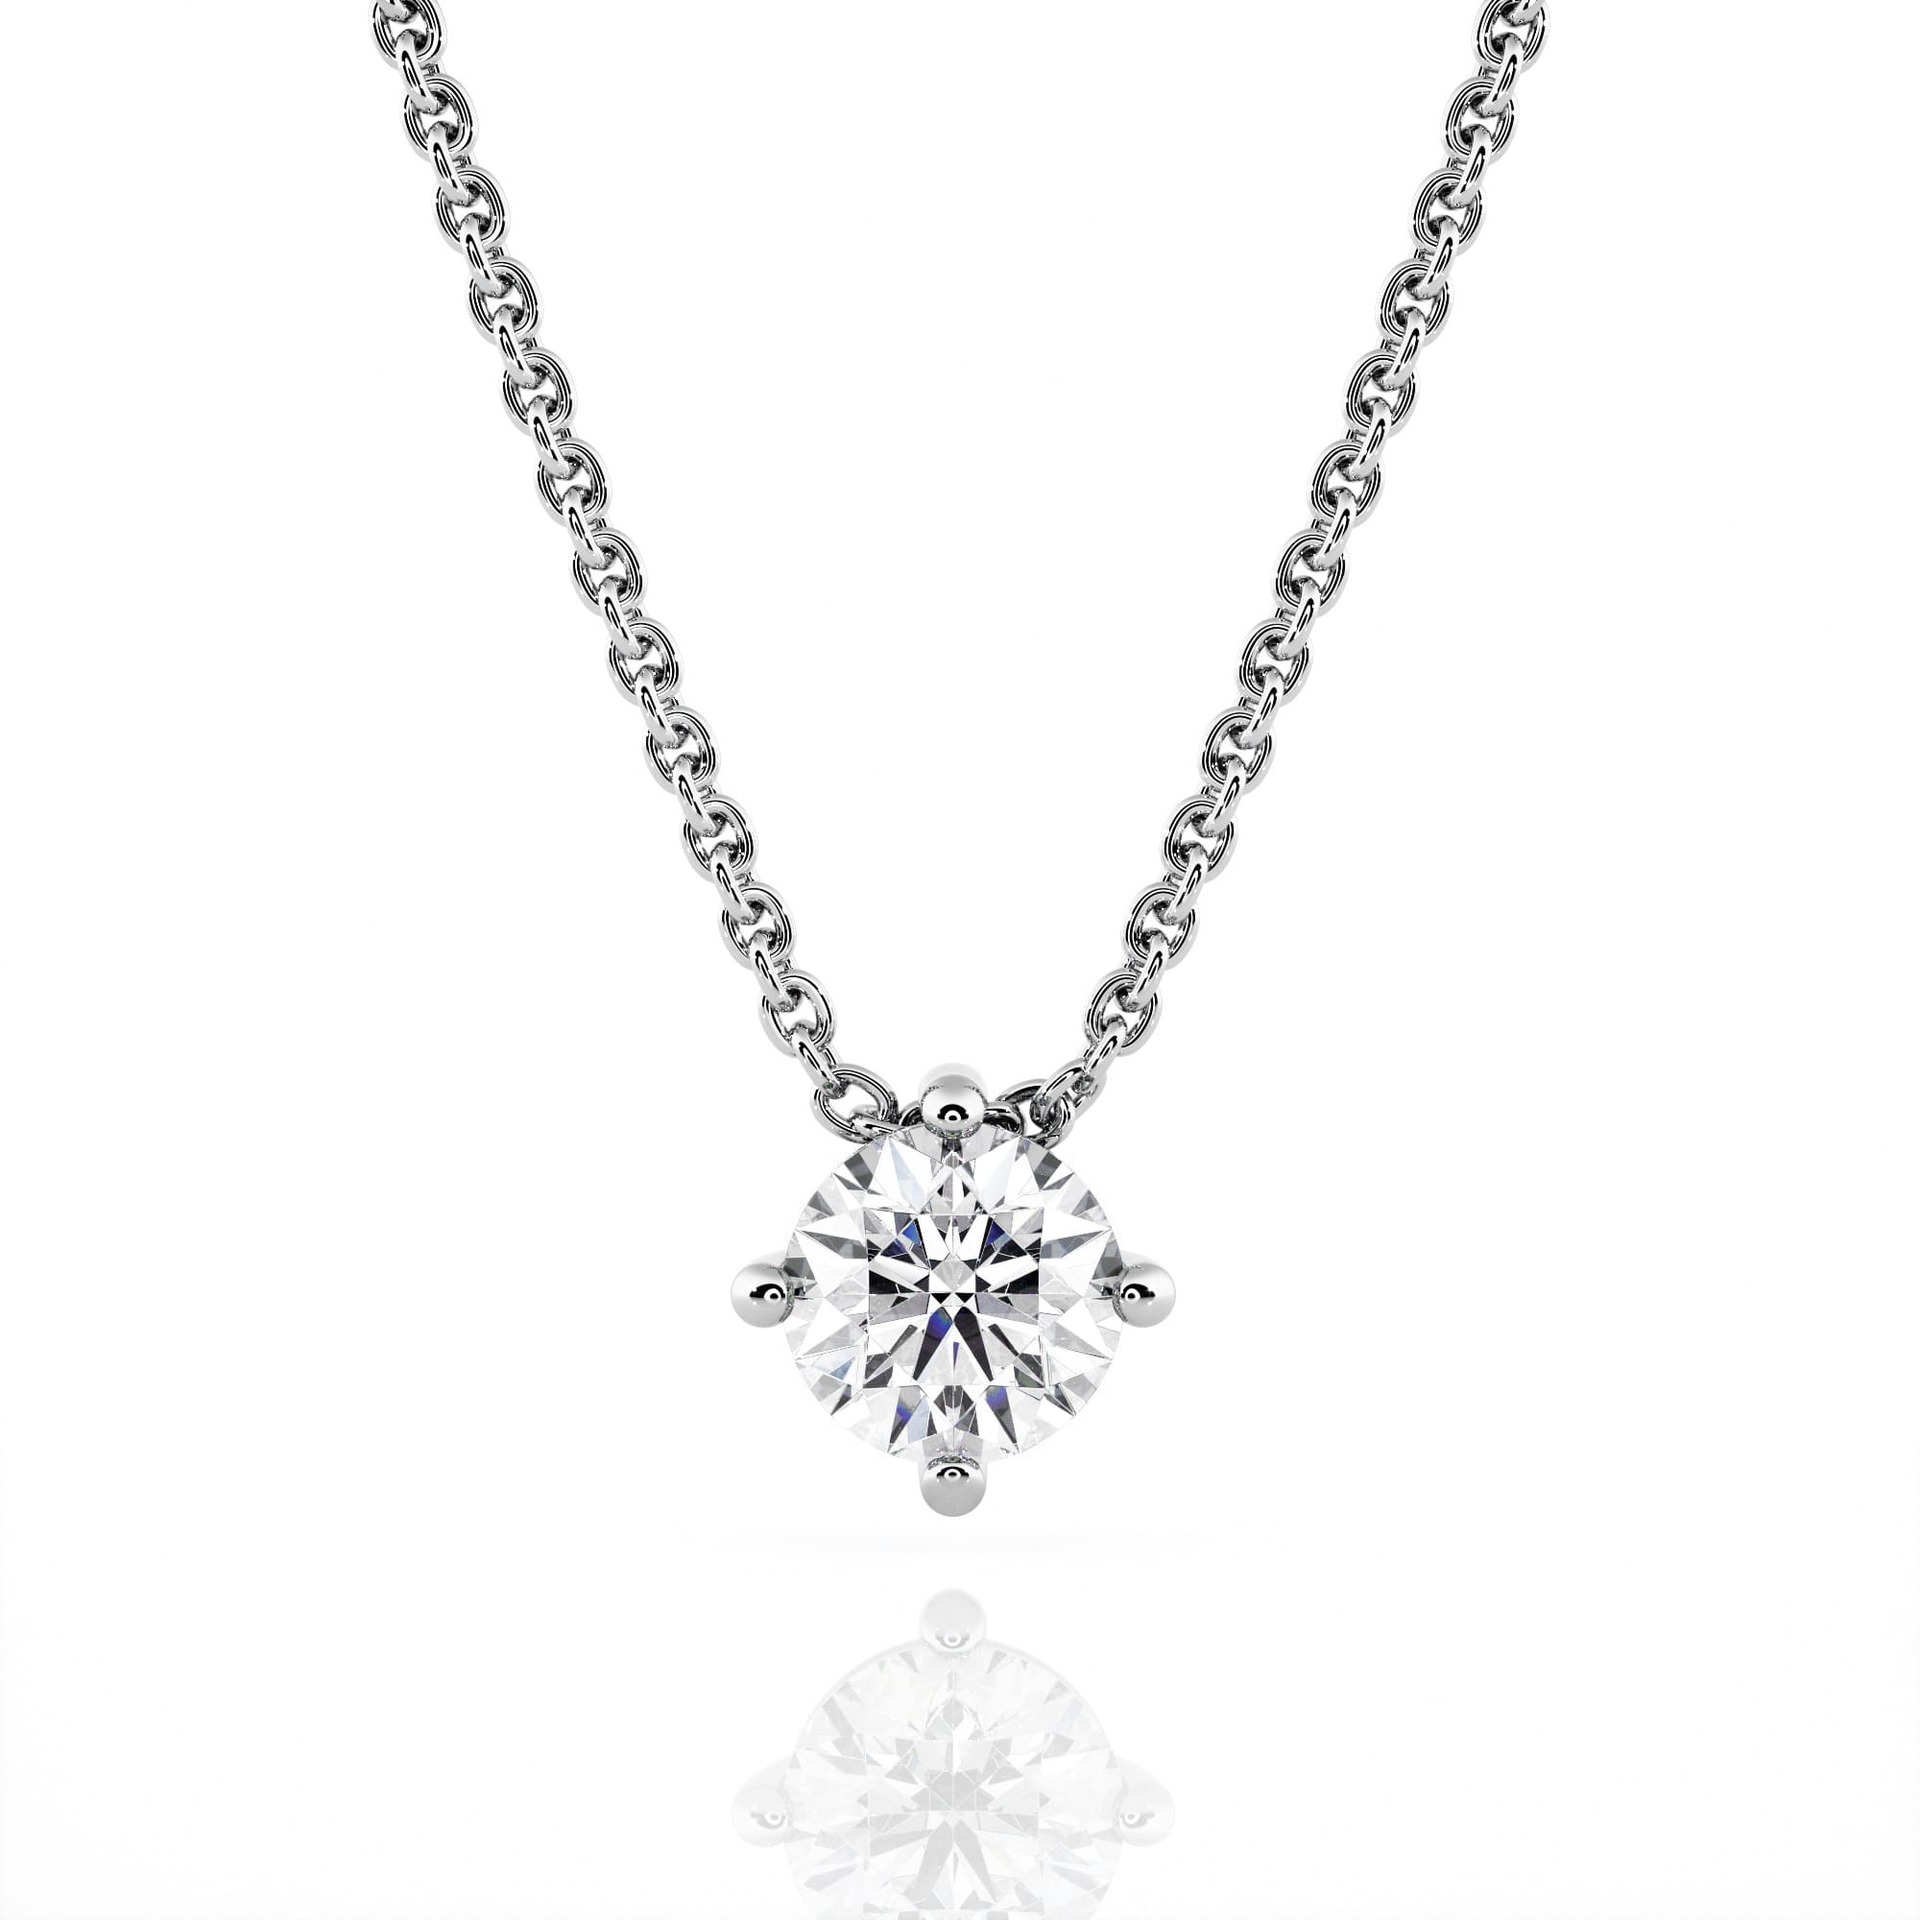 Pendant & Necklace Classics Diamond White Gold 4 Claws cross pendant